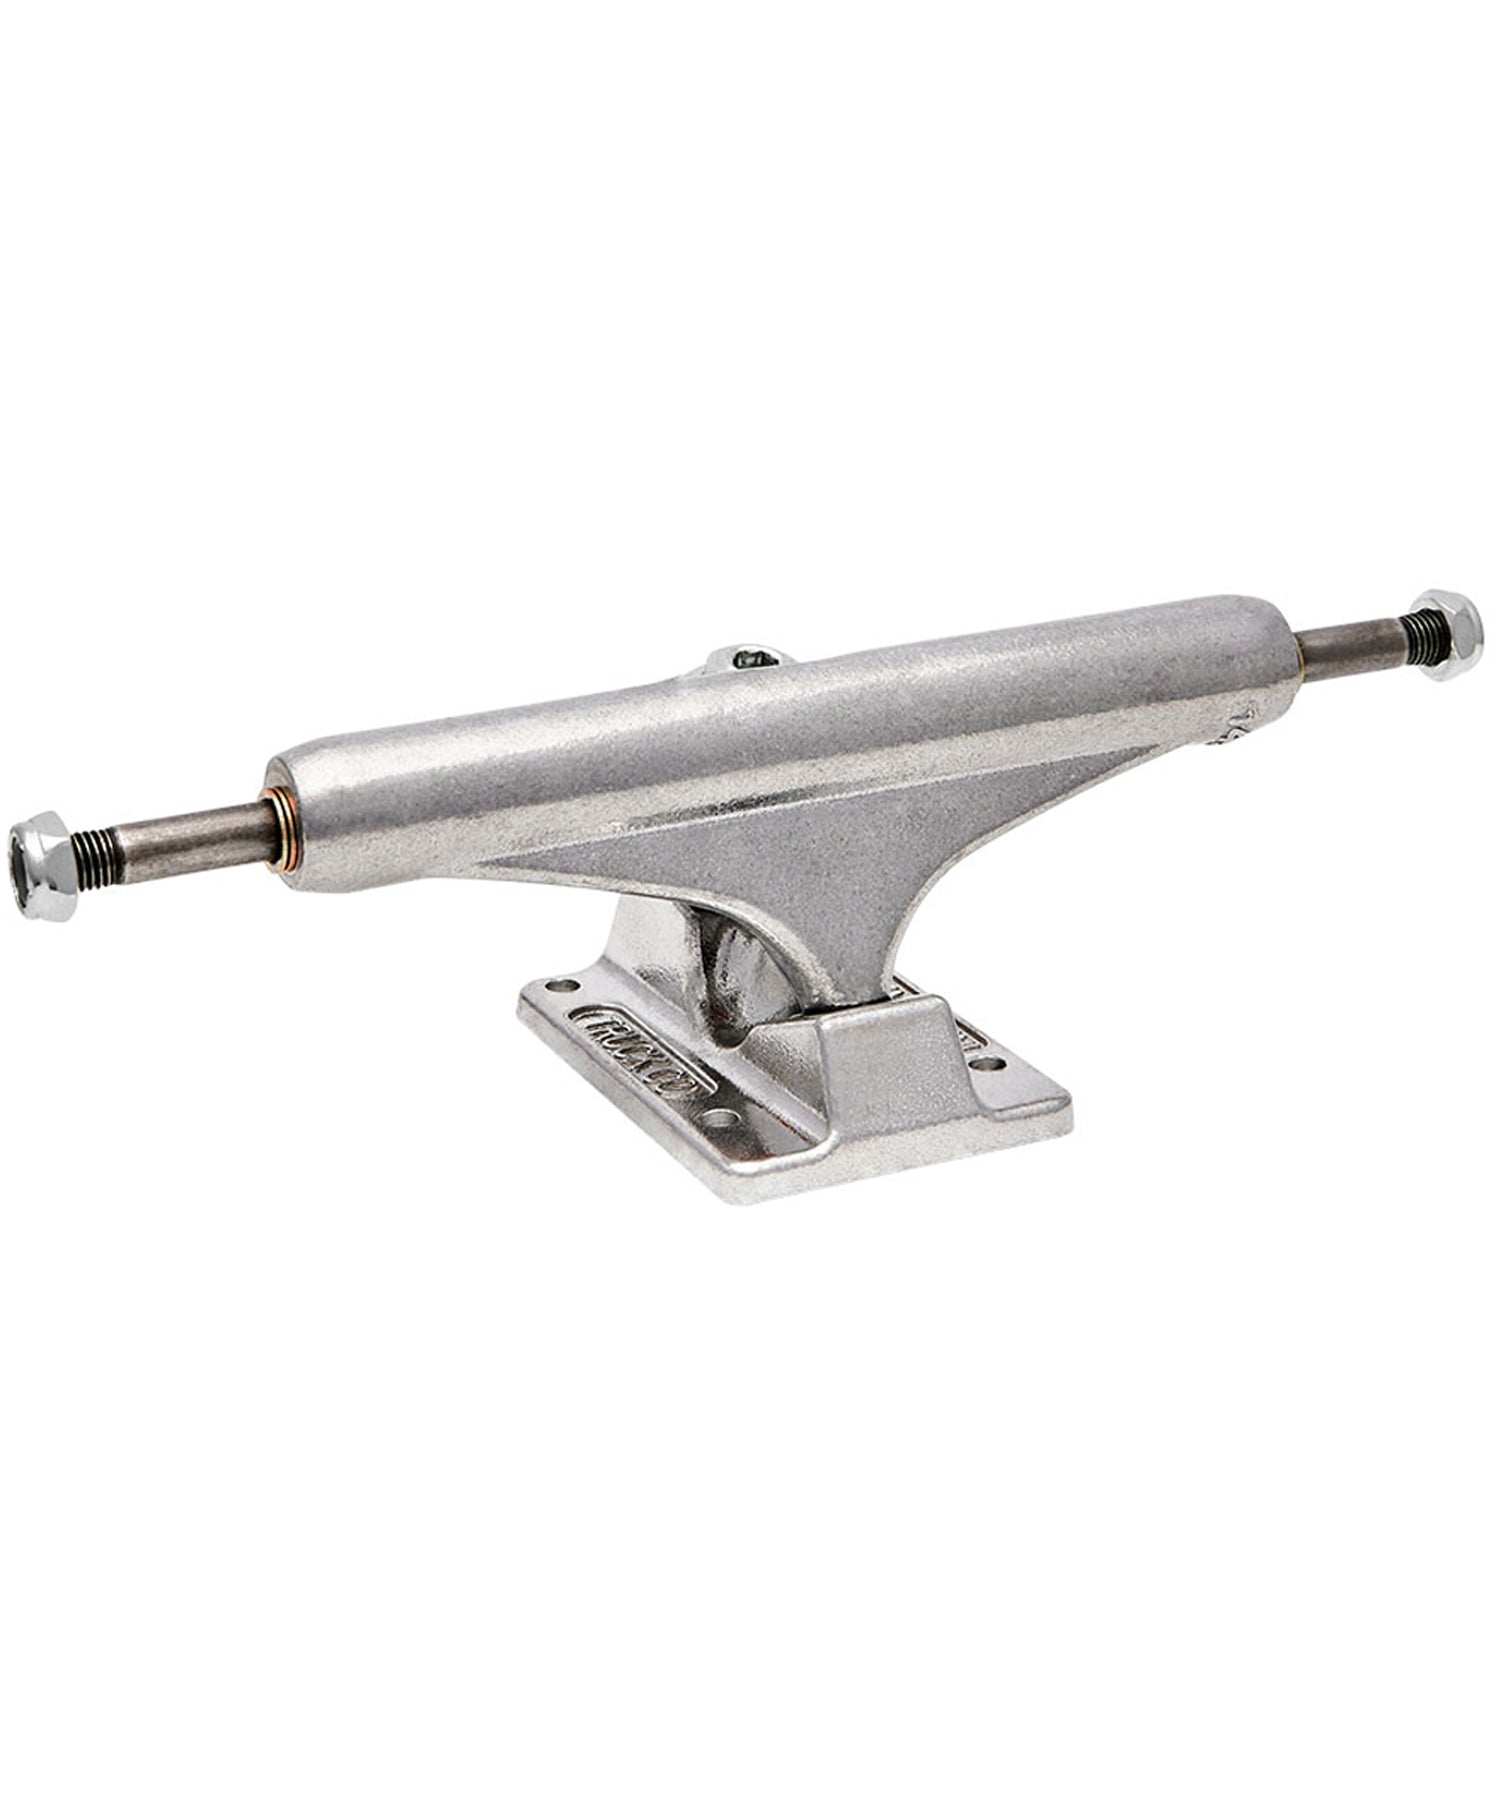 independent-mid-polished-129mm-mm-ejes de calidad-para skate-hanger y placa base de aluminio-duraderos-independent-marca reputada en ejes.